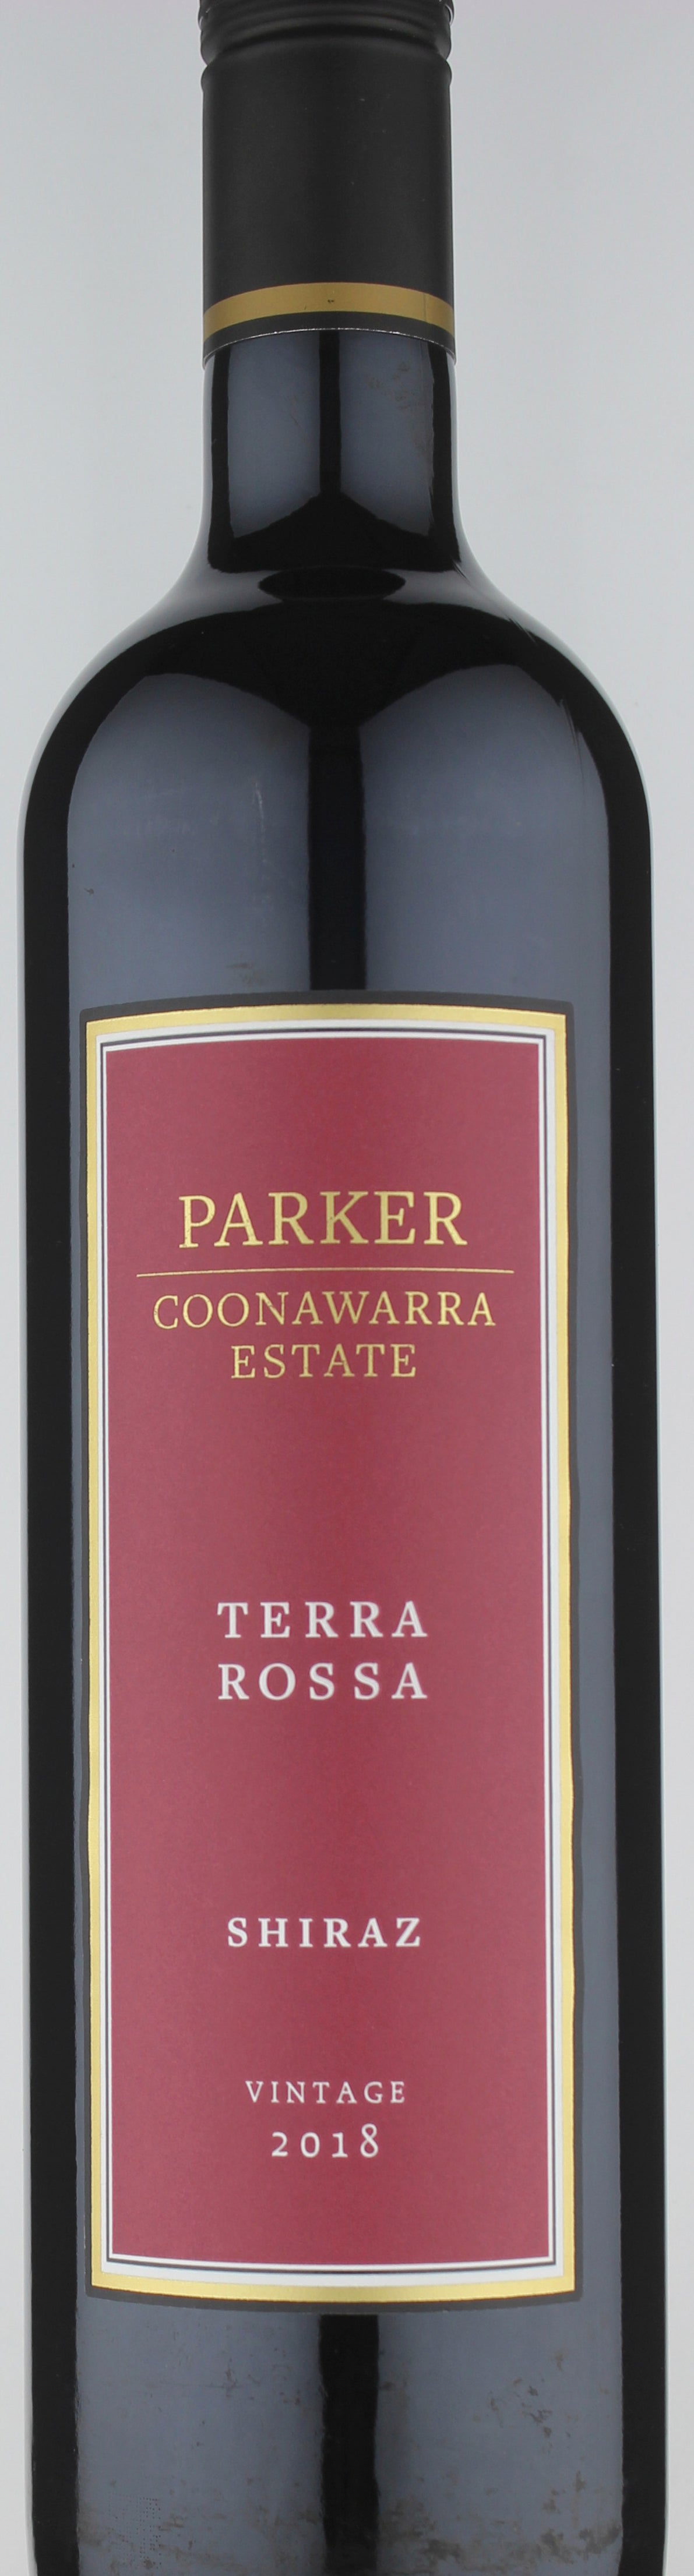 Parker Coonawarra Estate Terra Rossa Shiraz 2018